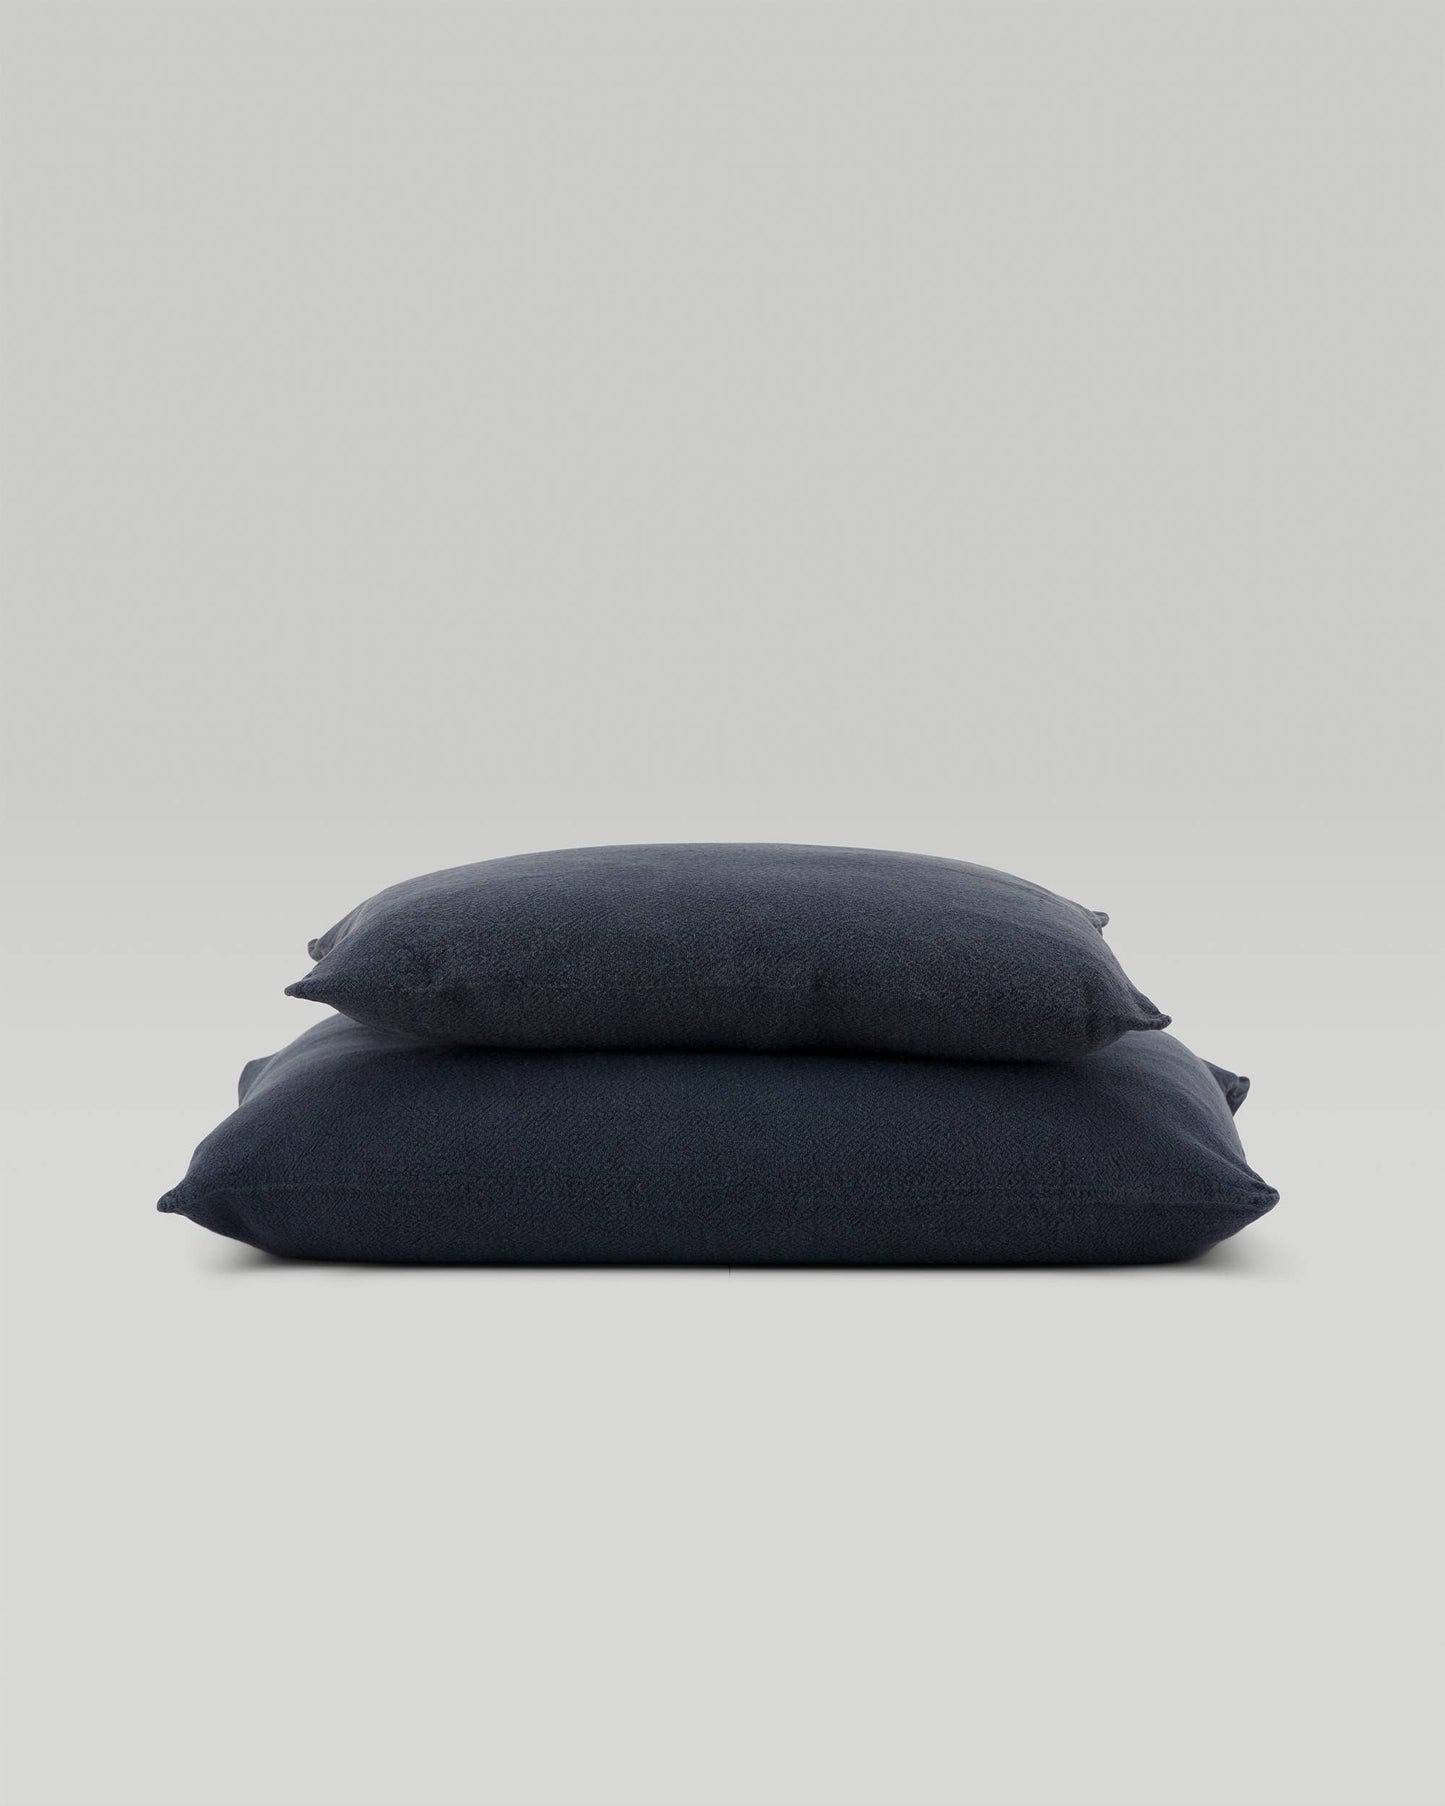 The Raw Linen Cushion